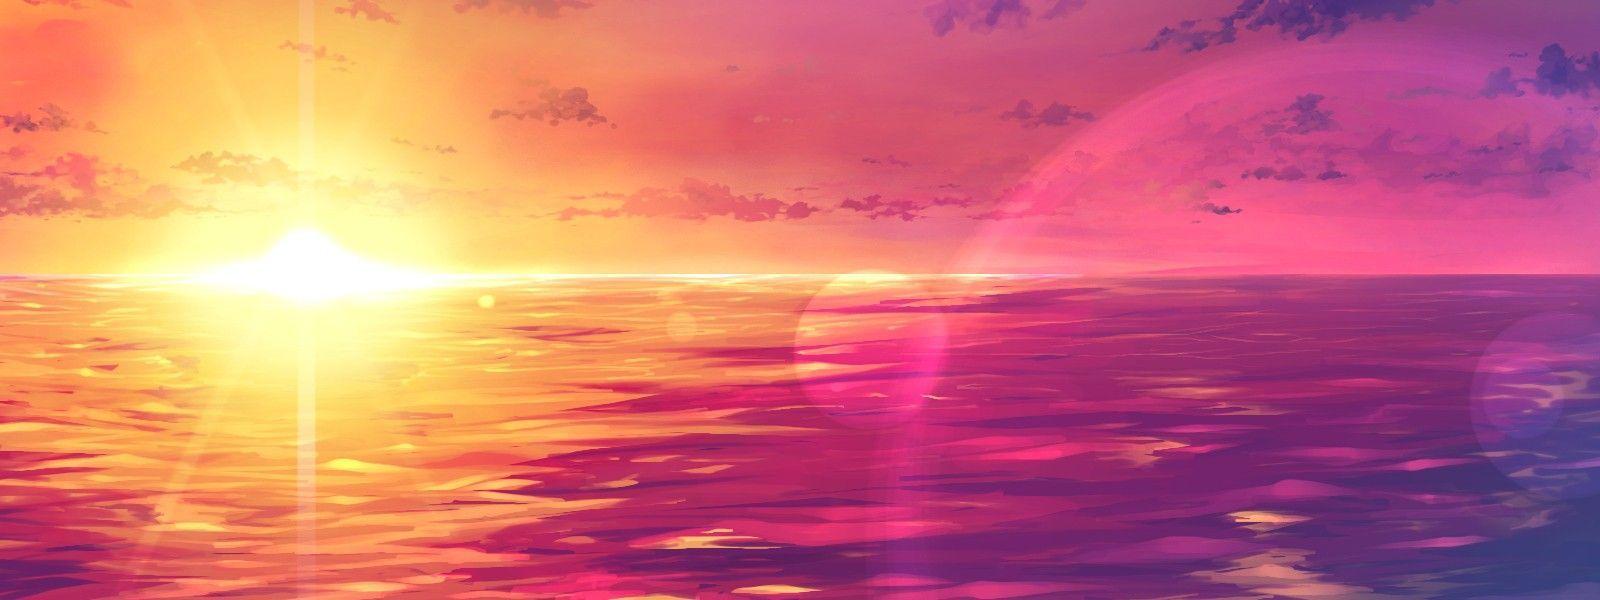 Pink Sunset Wallpapers Desktop - Wallpaper Cave